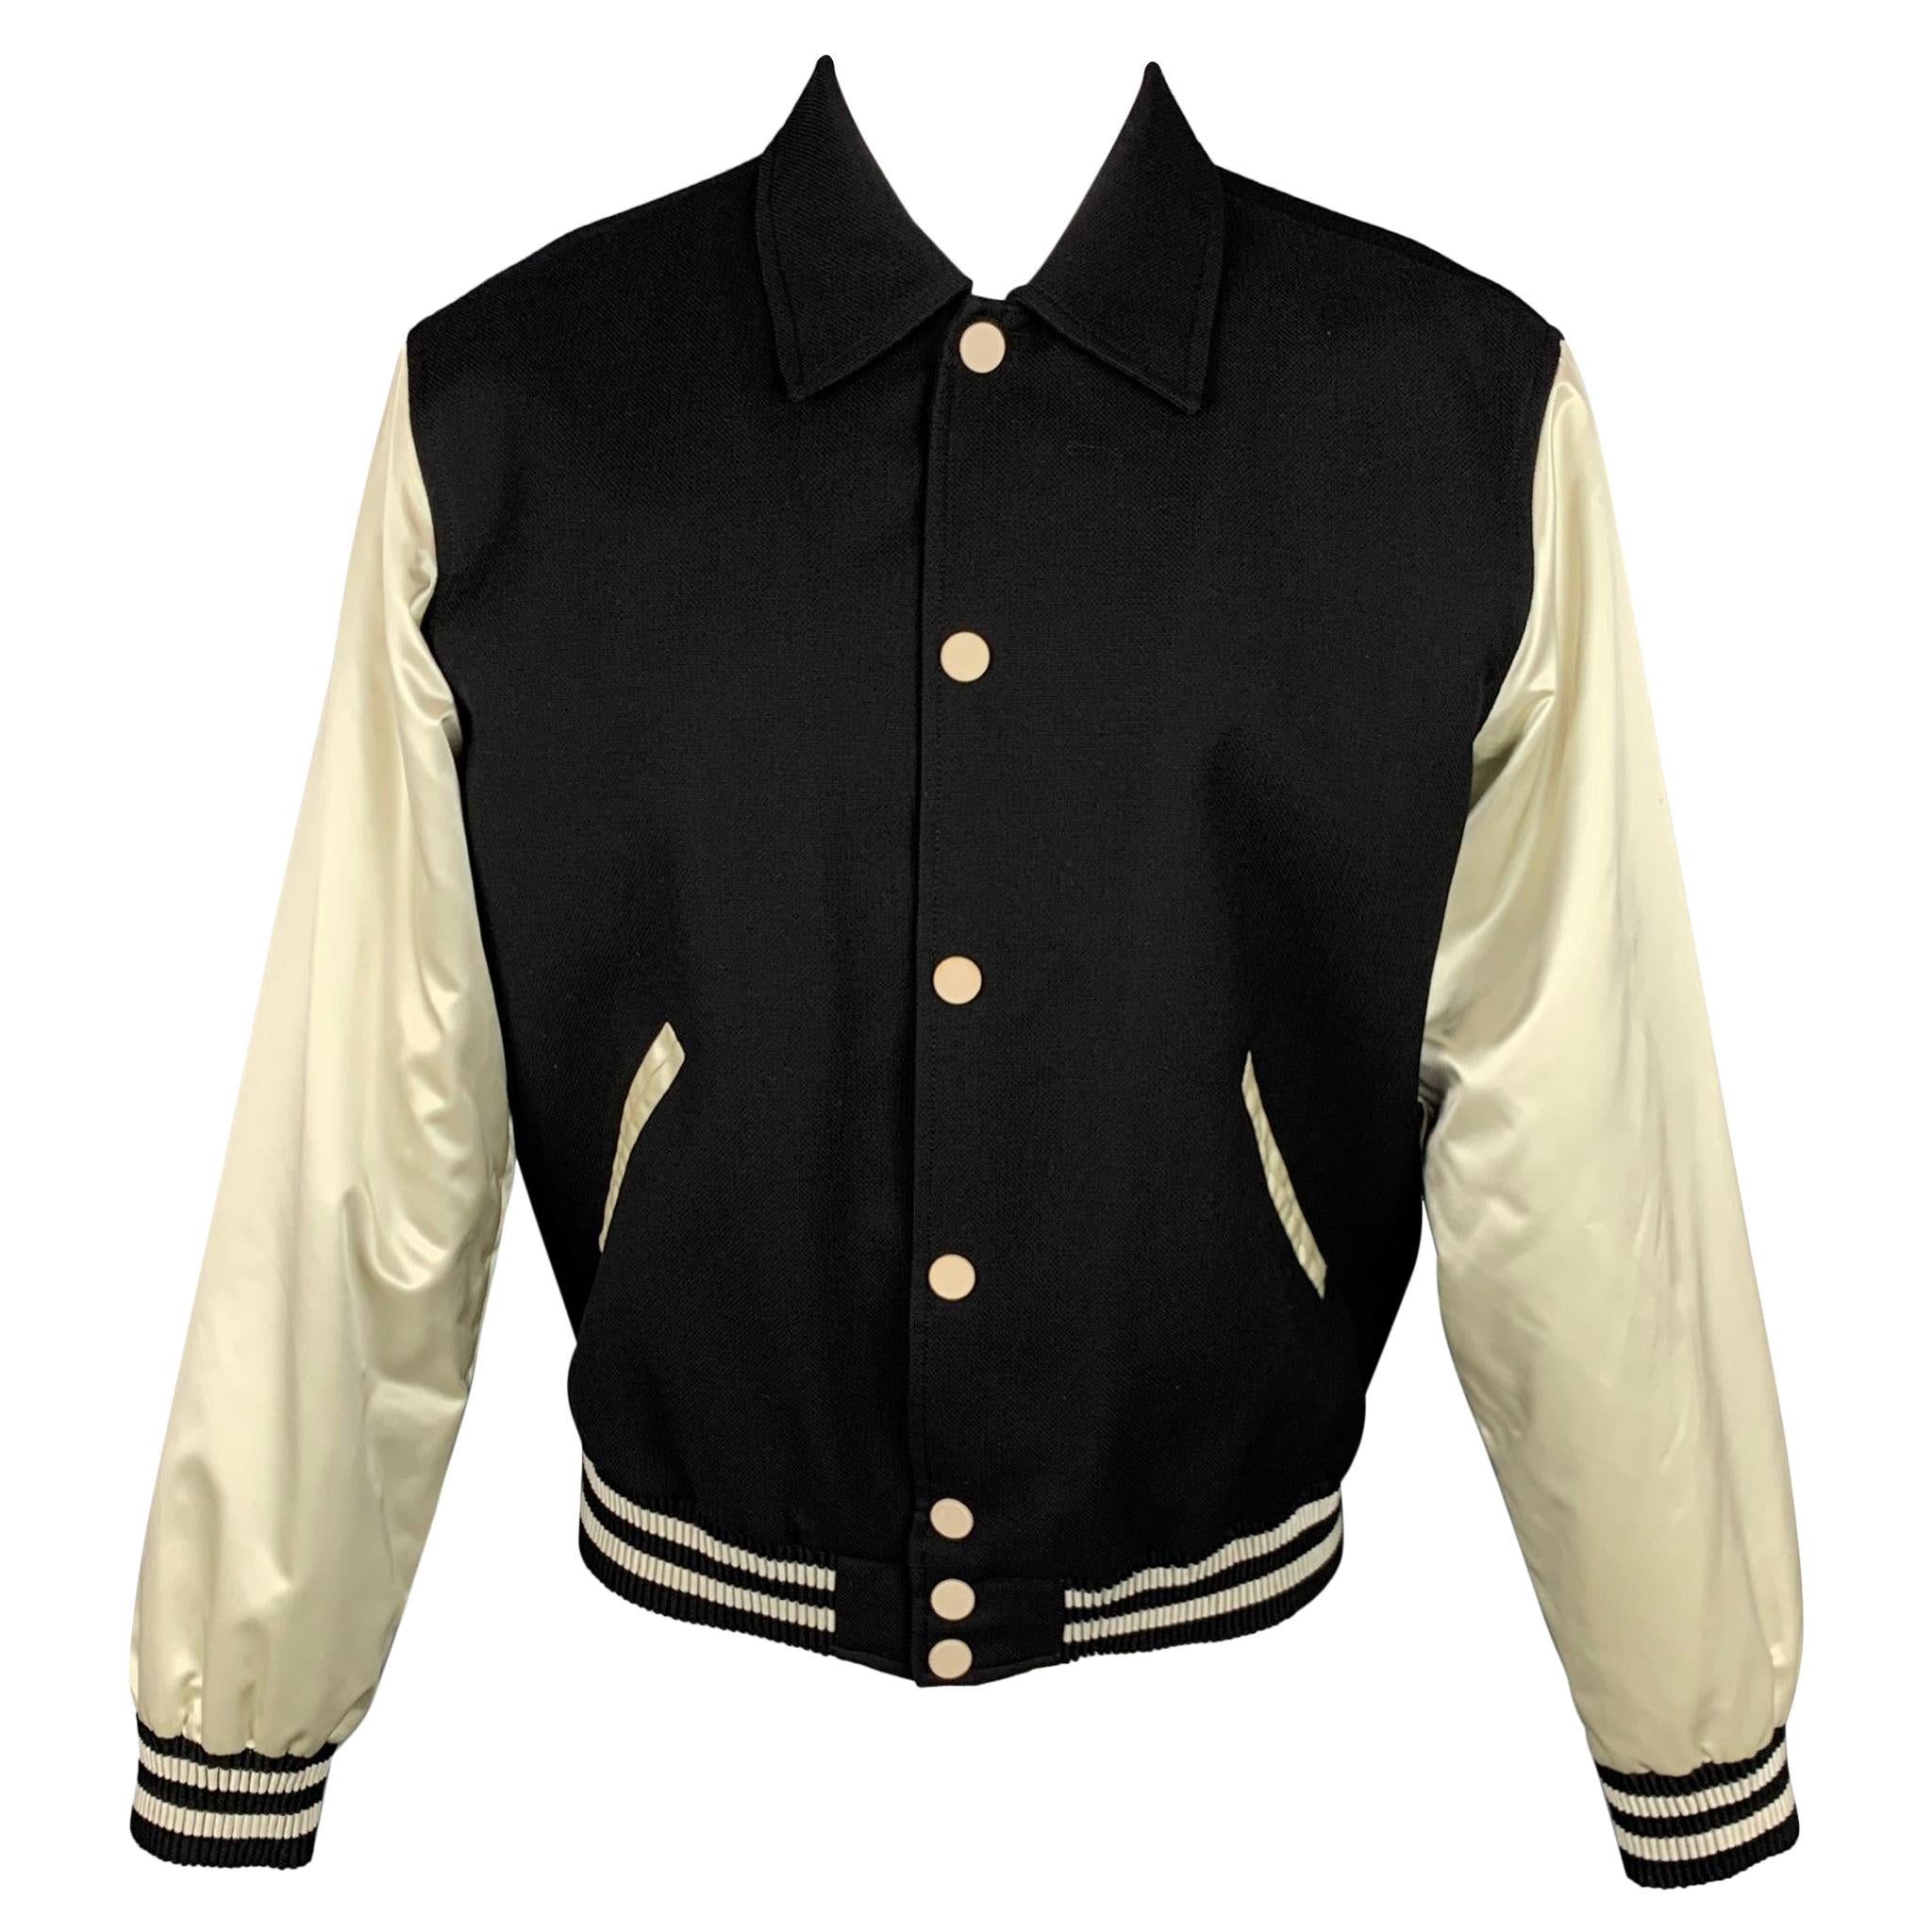 CALVIN KLEIN COLLECTION Size M Black & Beige Mixed Fabrics Jacket